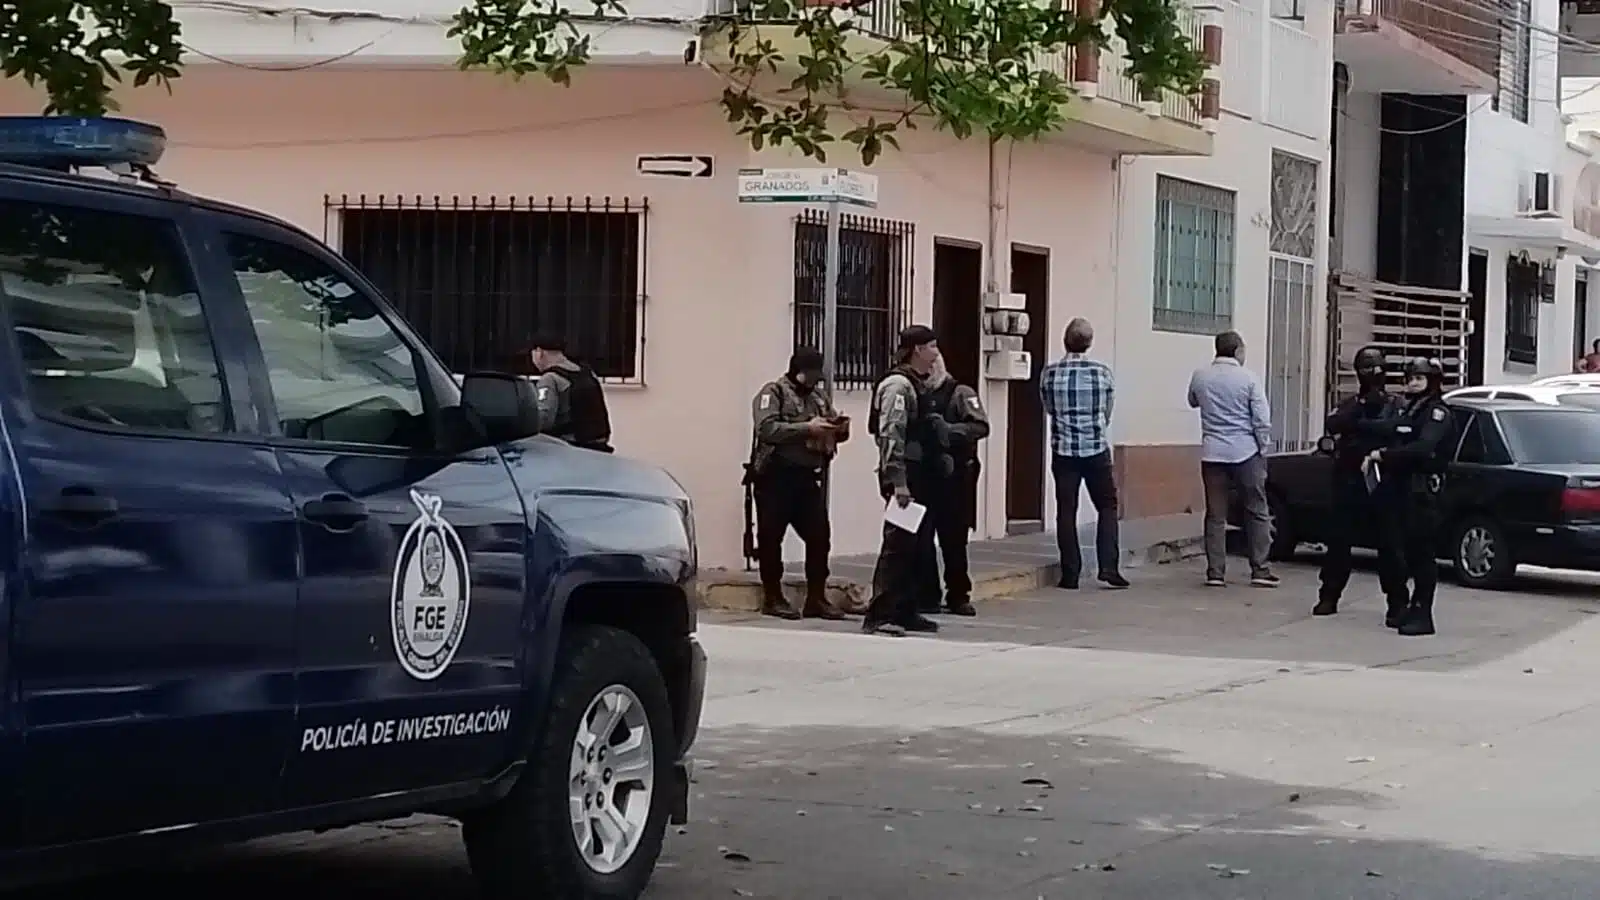 Policía de Invetsigación Culiacán